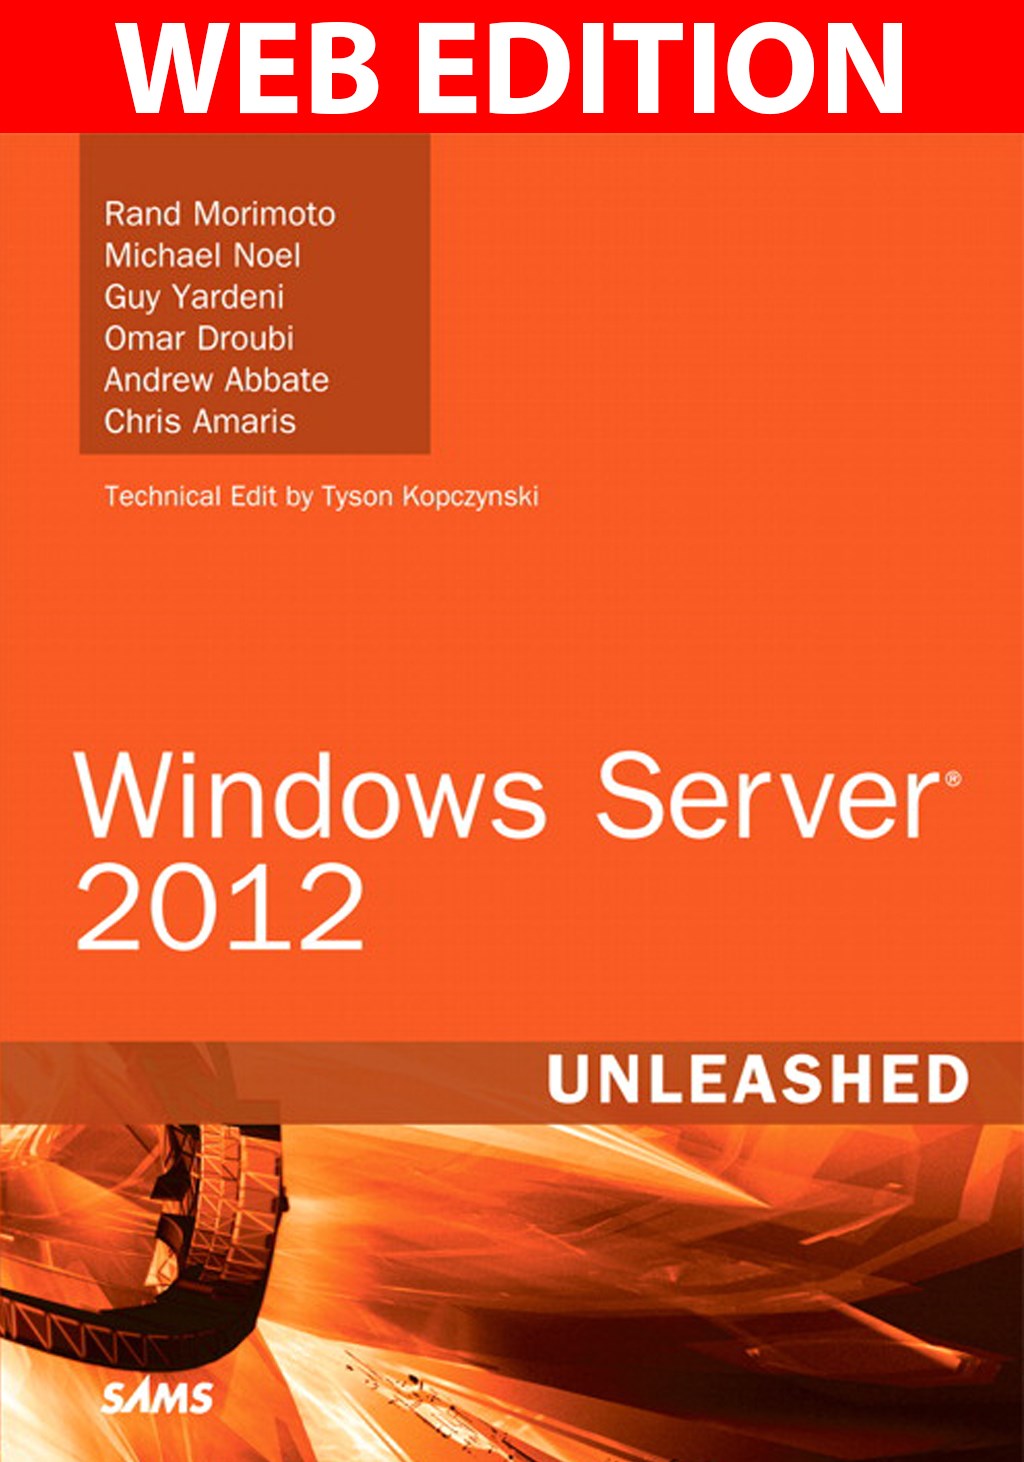 Windows Server 2016 Unleashed, Web Edition